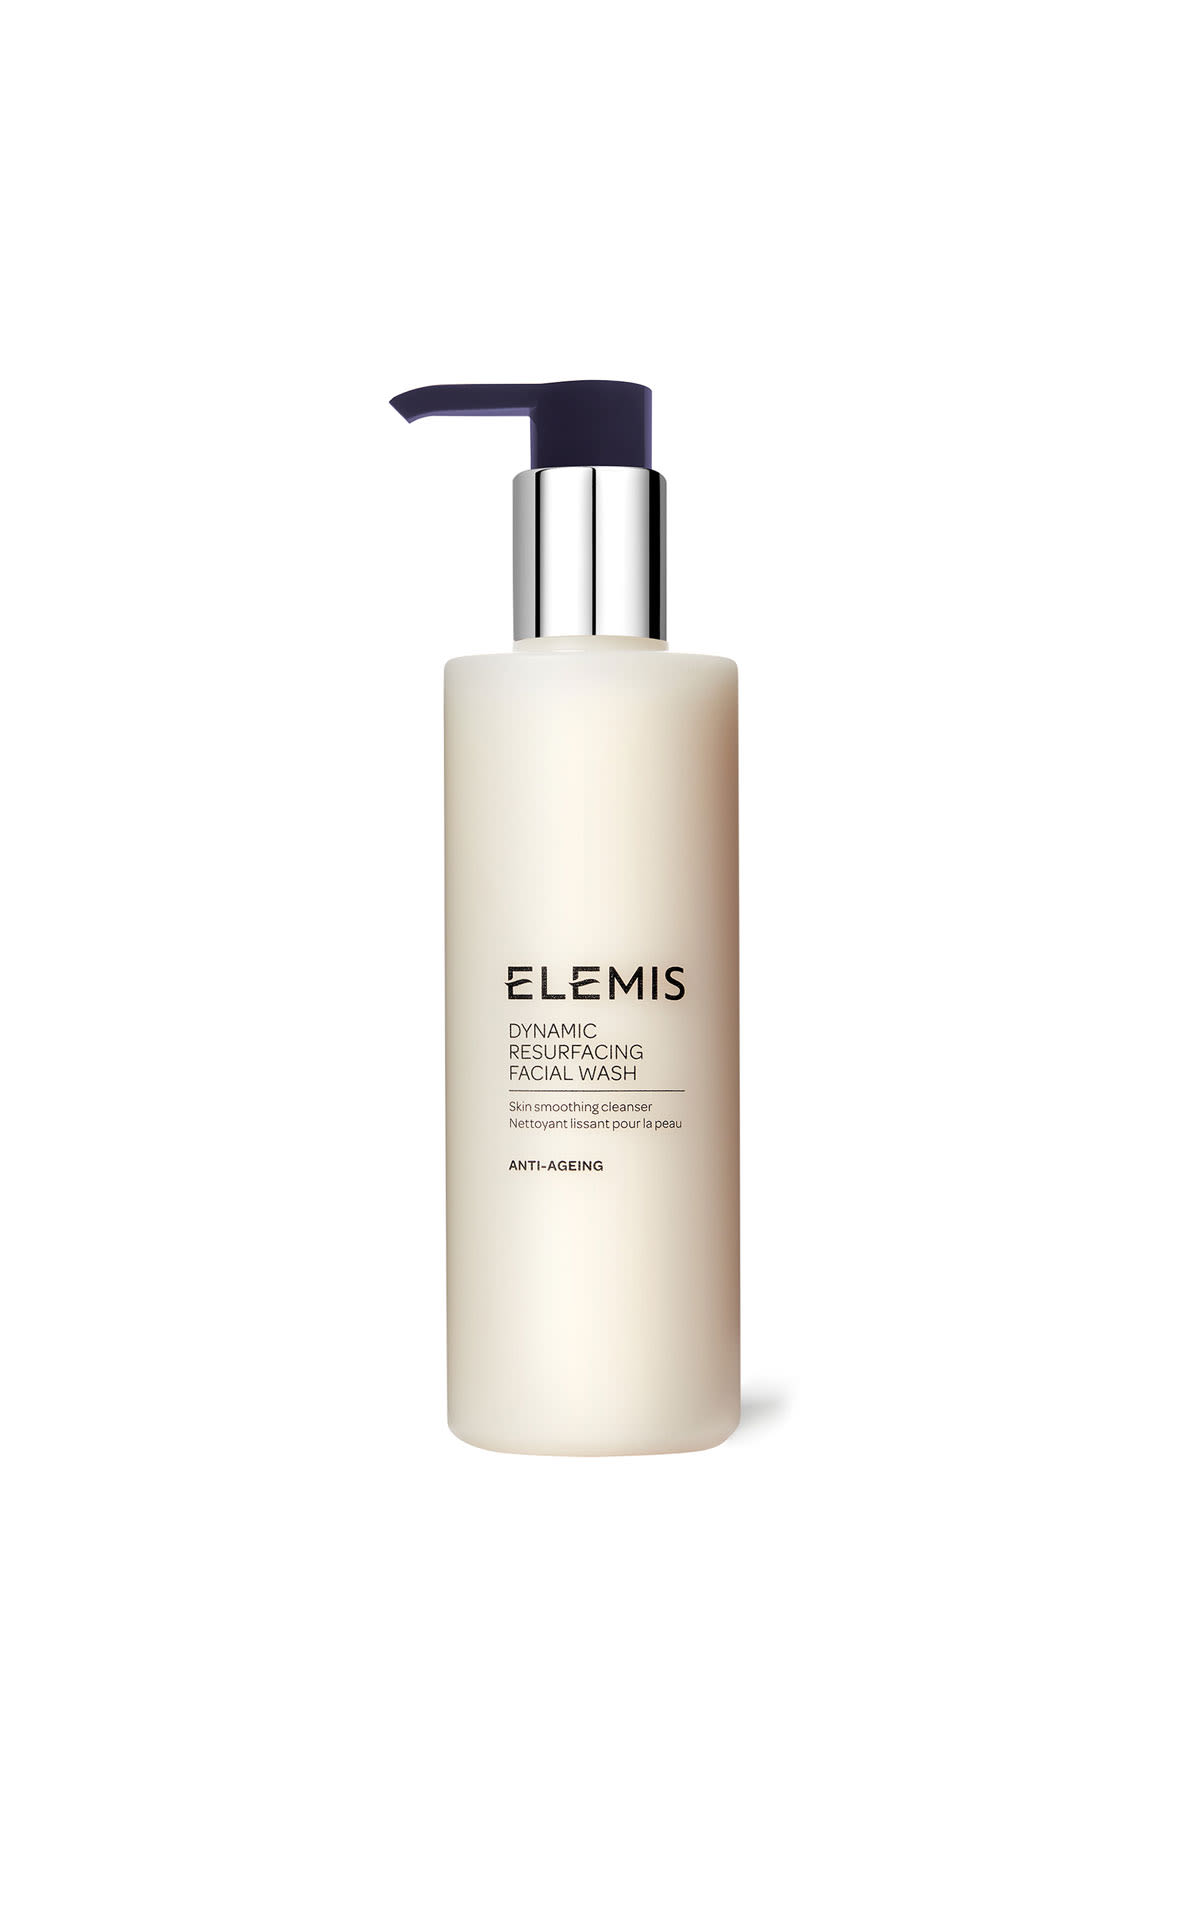 ELEMIS Dynamic resurfacing facial wash 200ml from Bicester Village